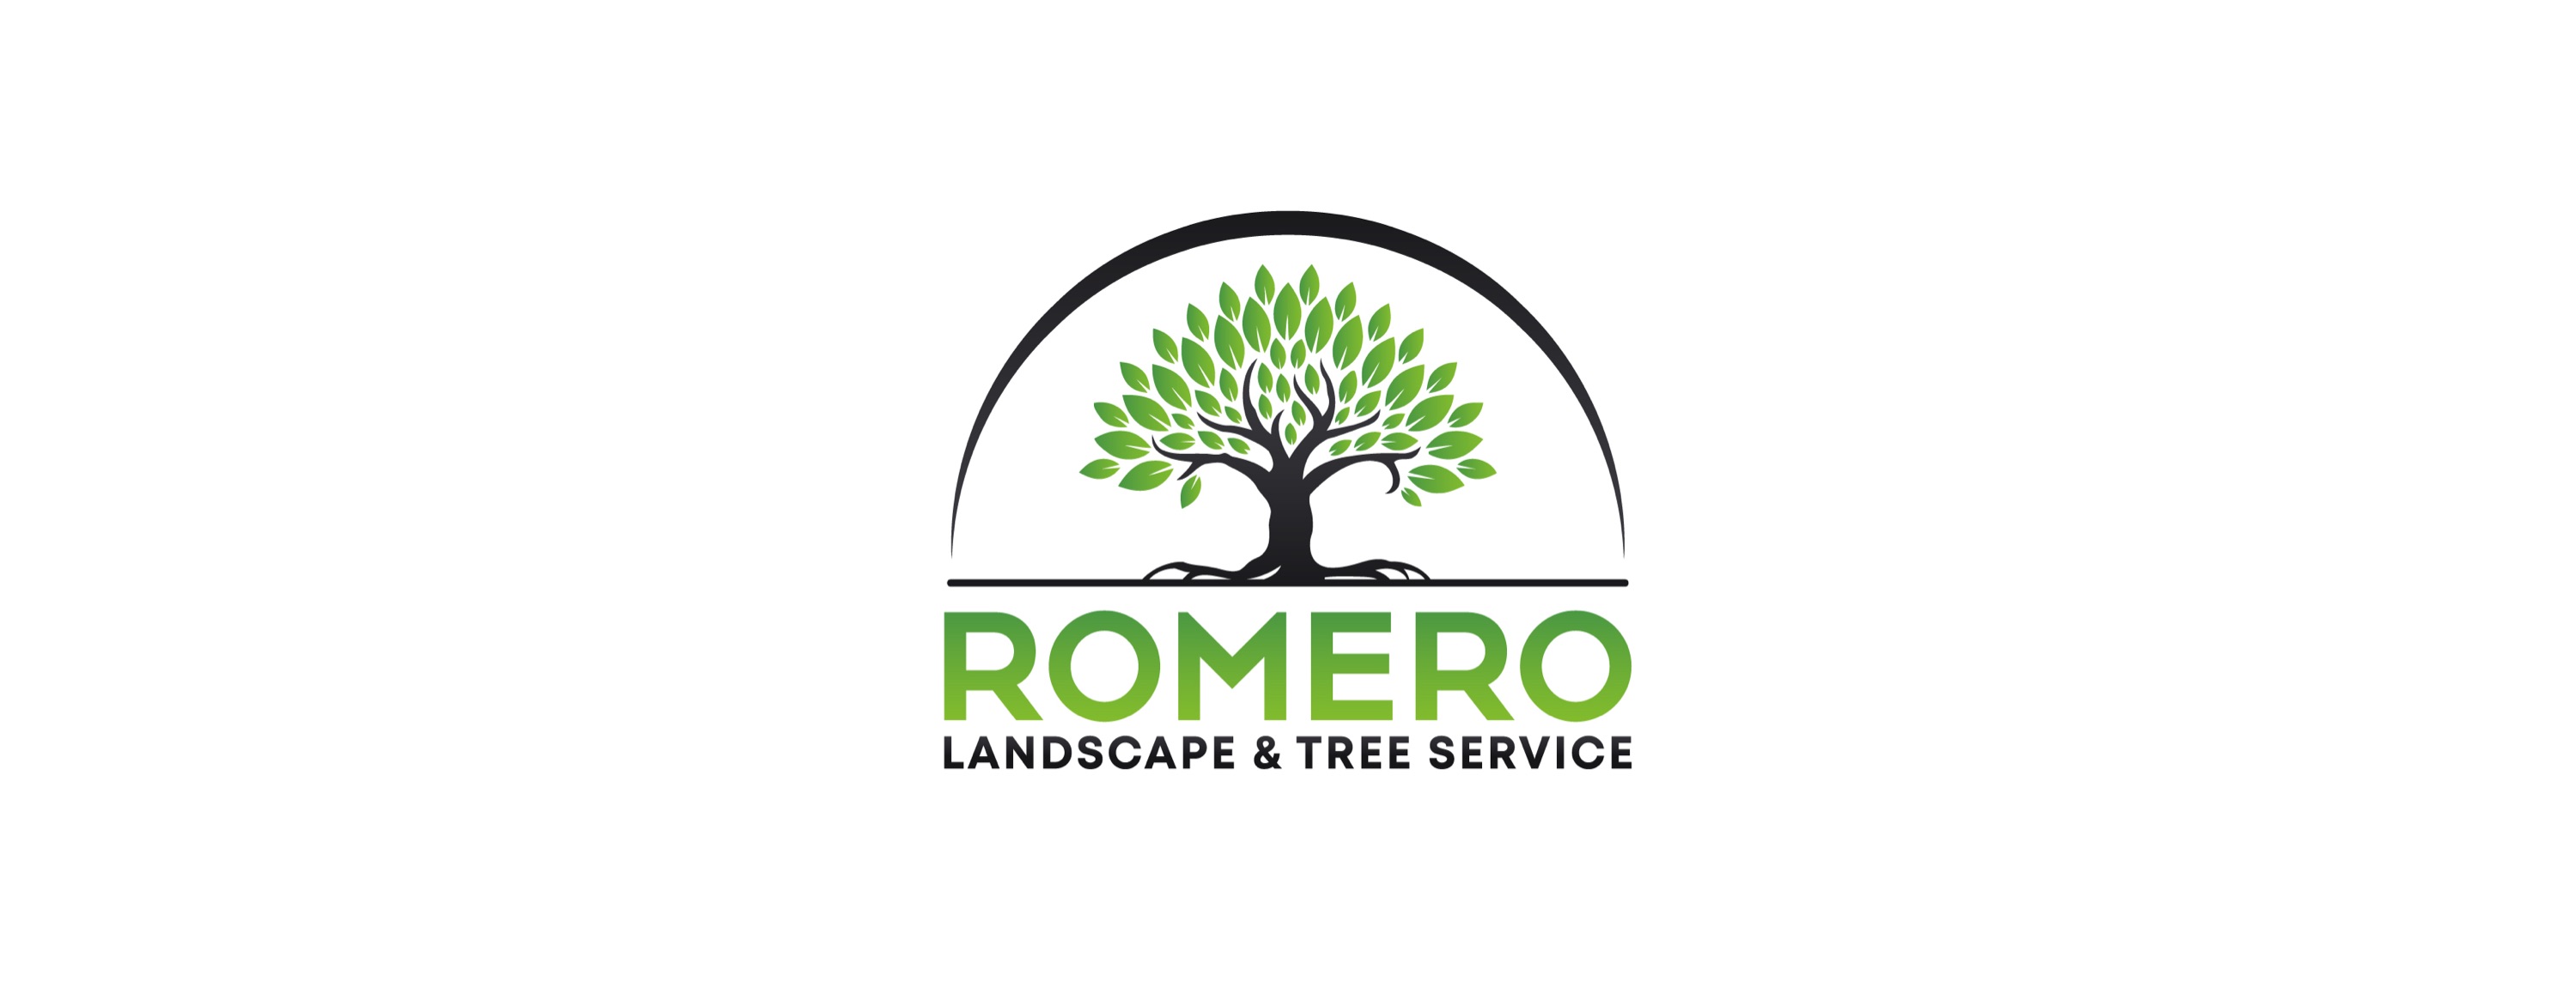 Romero Landscape & Tree Service Logo